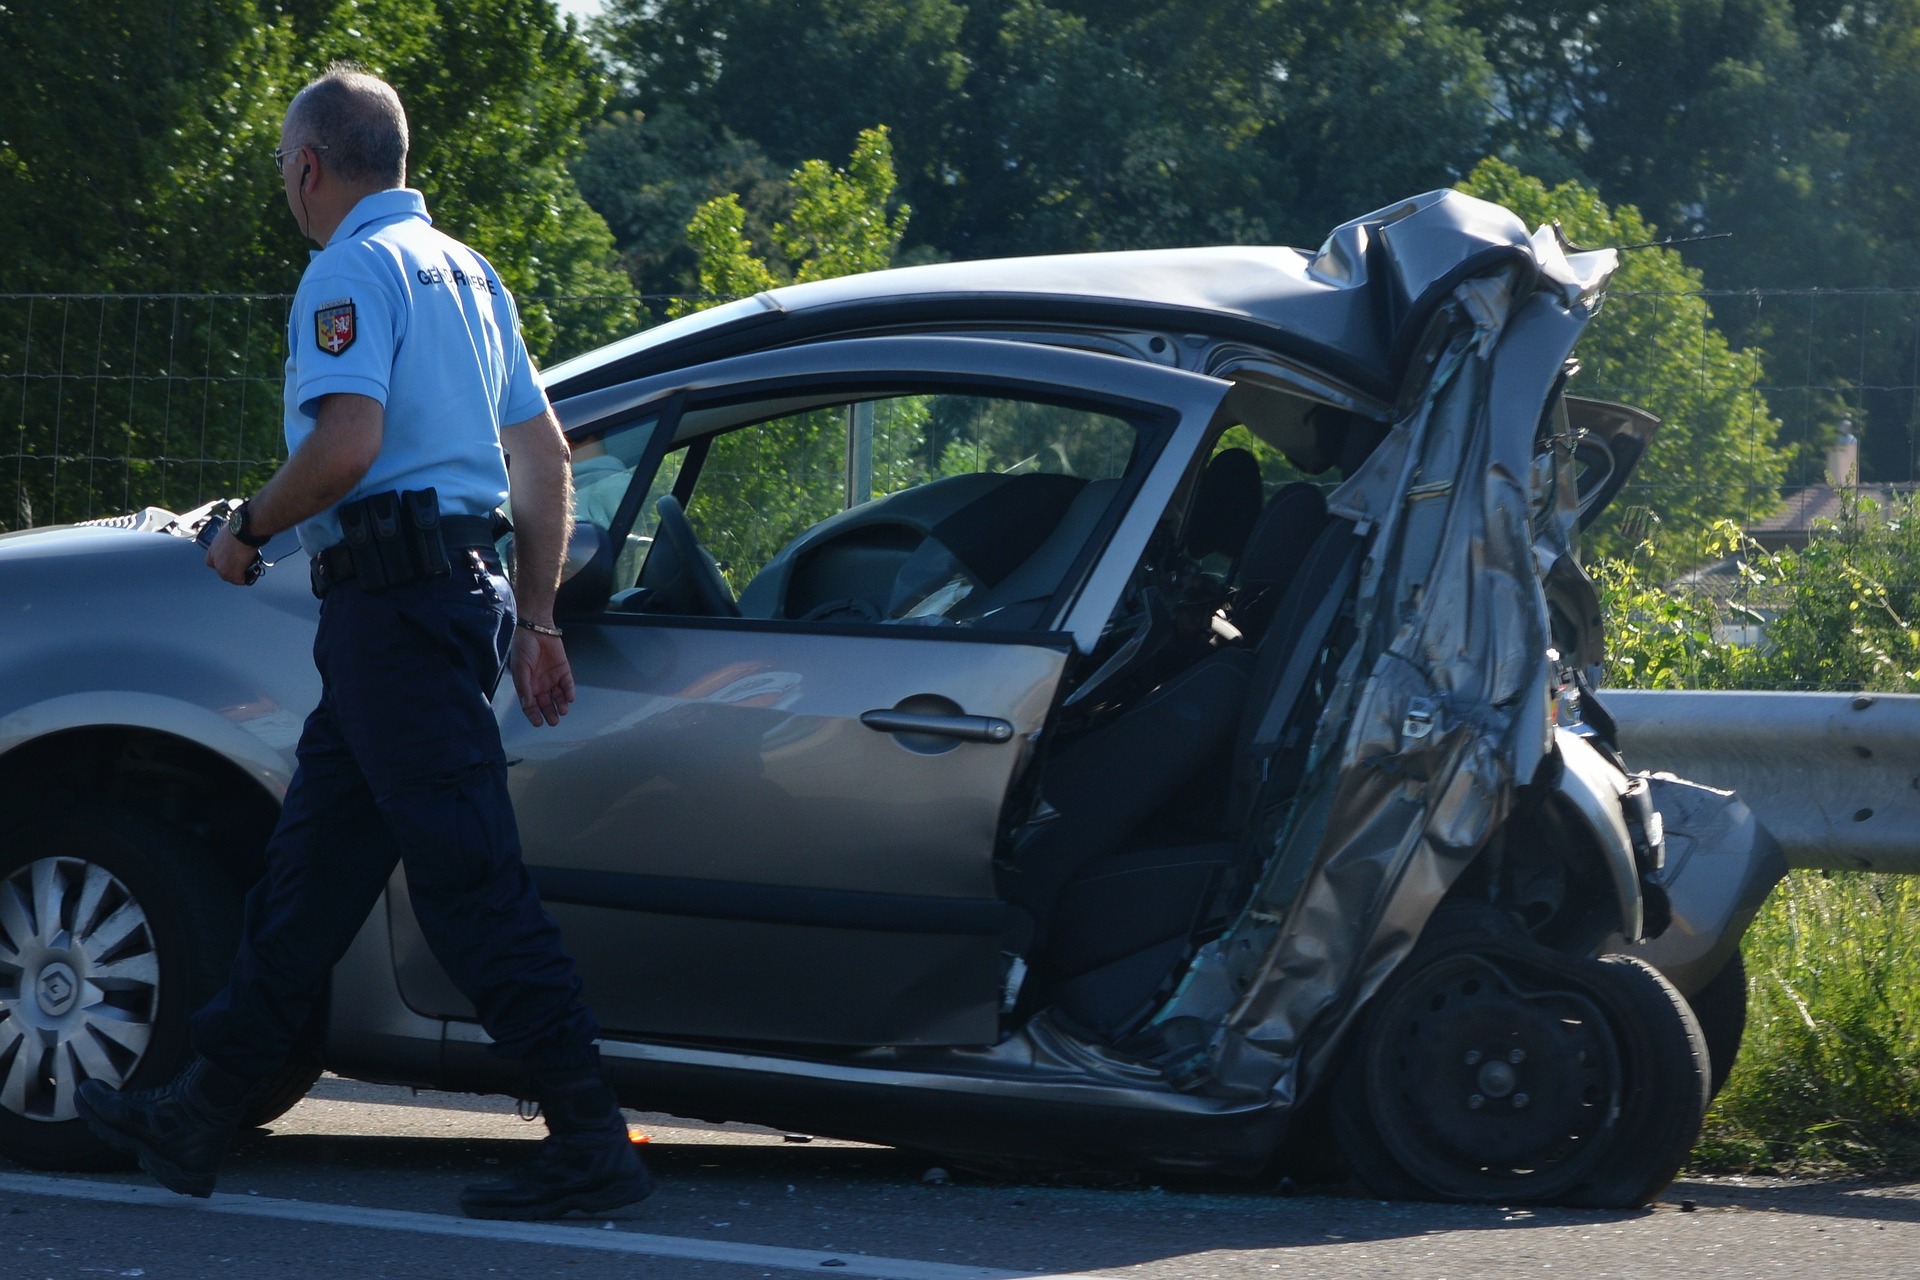 Ca Automobile Accident Attorneys